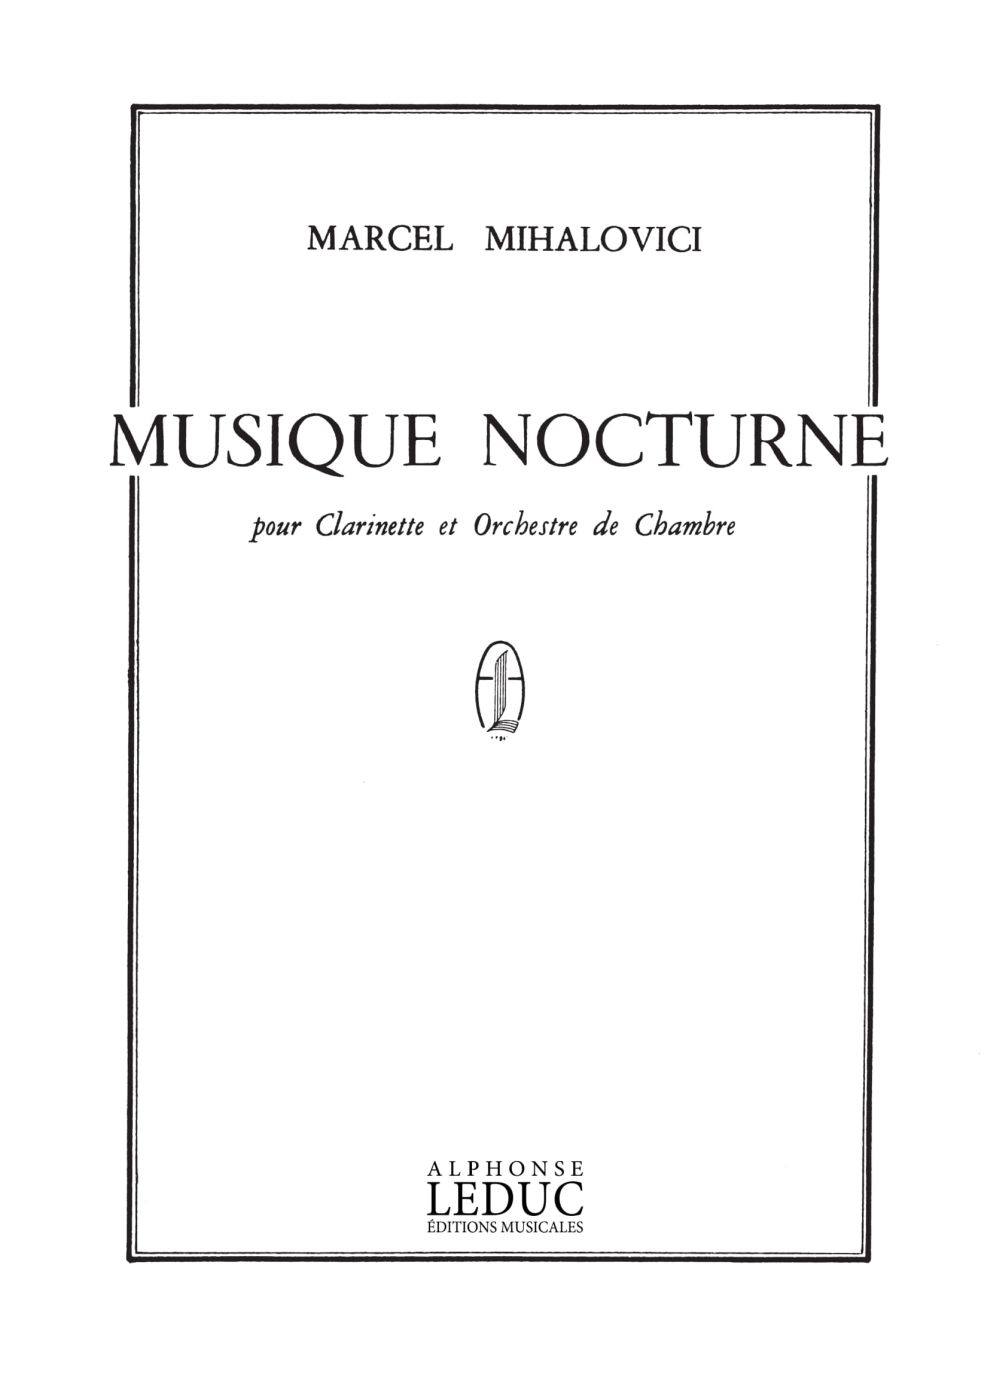 Marcel Mihalovici: Marcel Mihalovici: Musique nocturne: Ensemble: Score